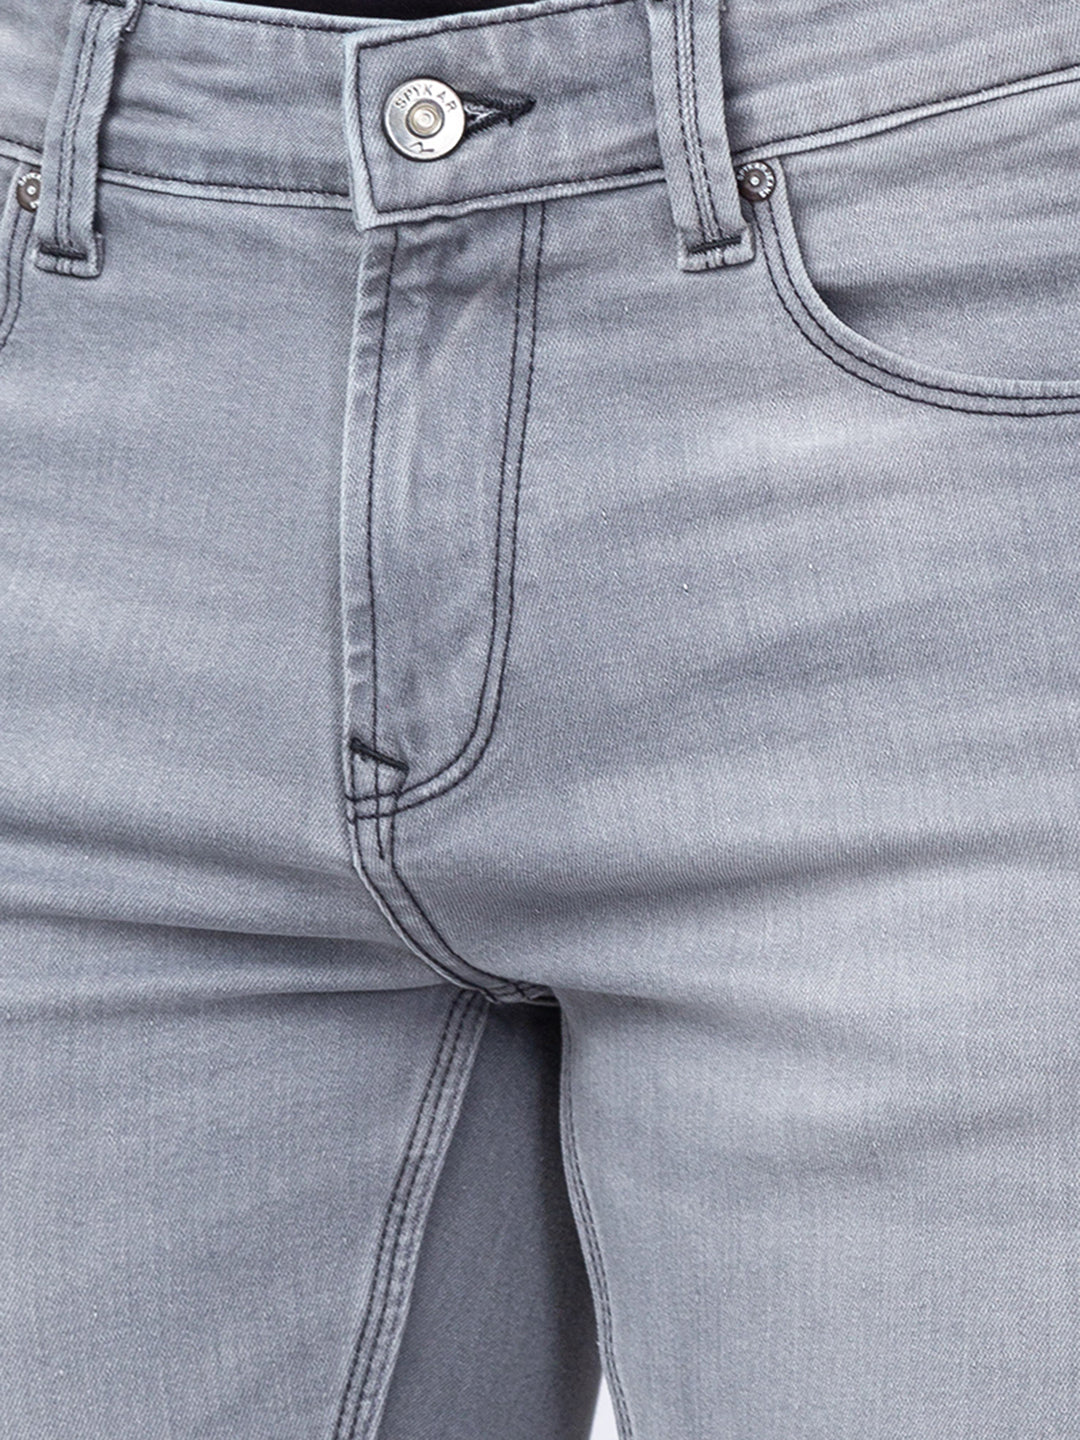 Spykar Men Light Grey Cotton Slim Fit Narrow Length Jeans (Skinny)